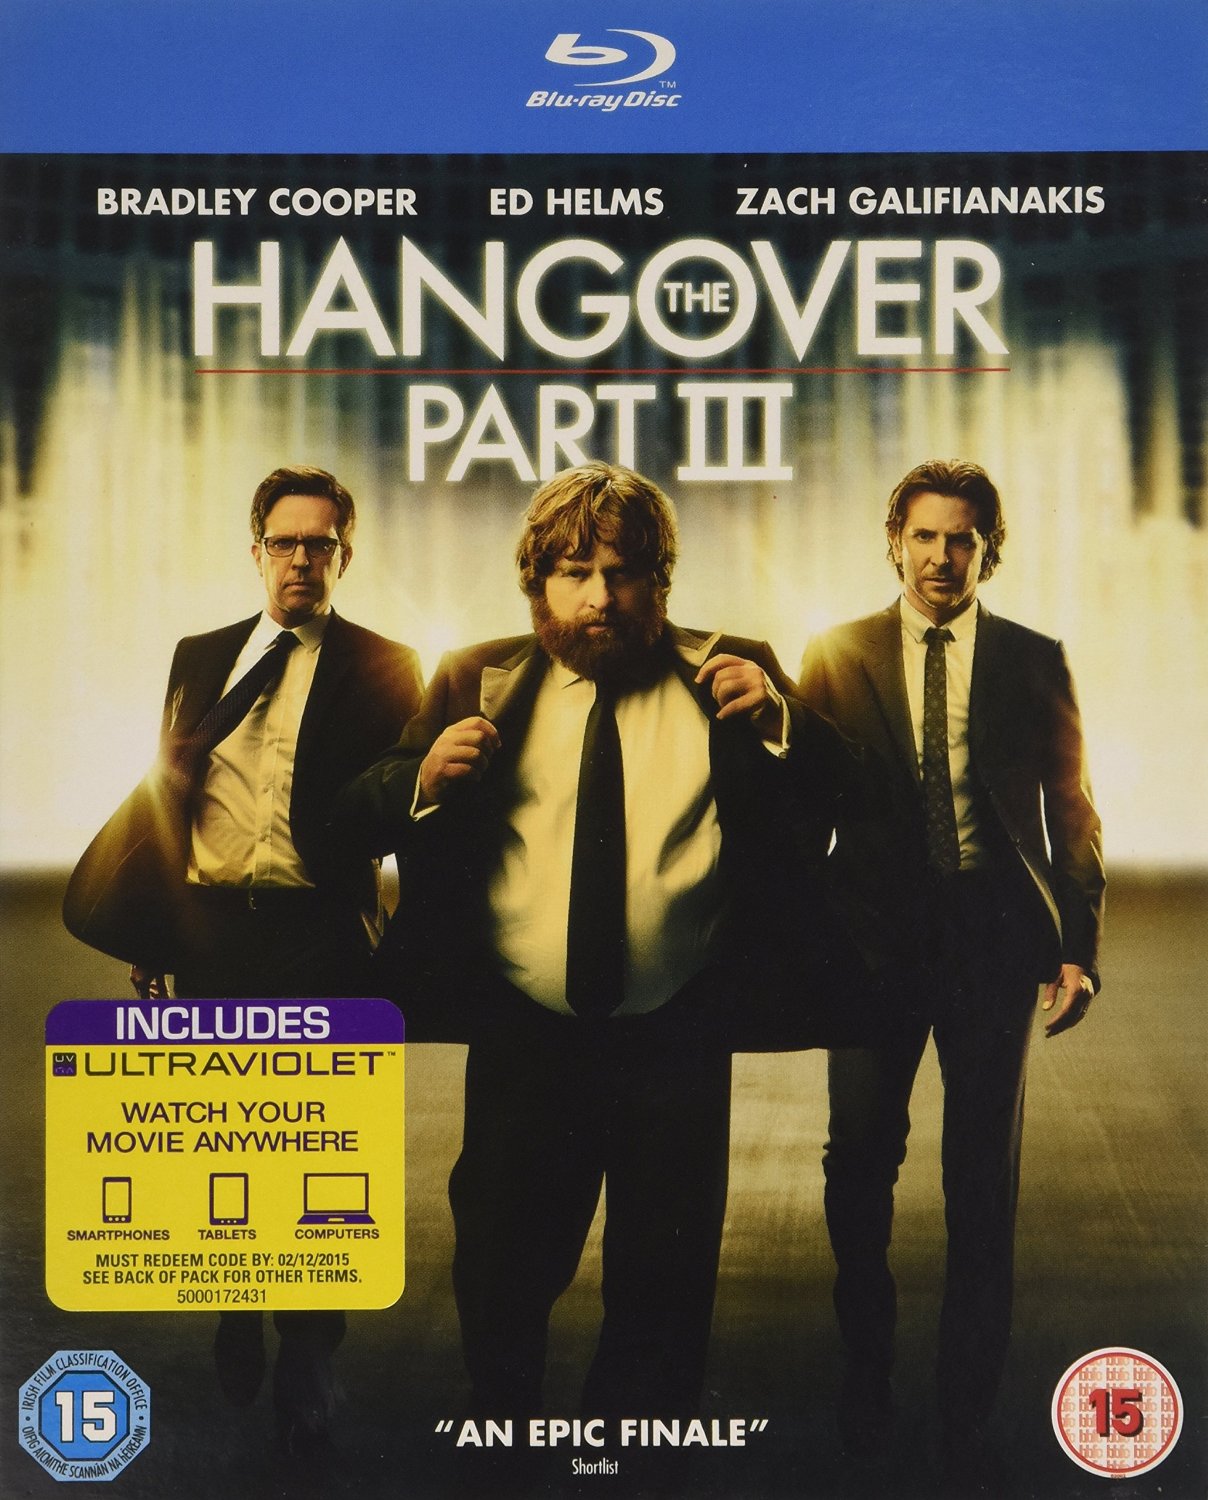 The Hangover Part III (Blu-Ray)